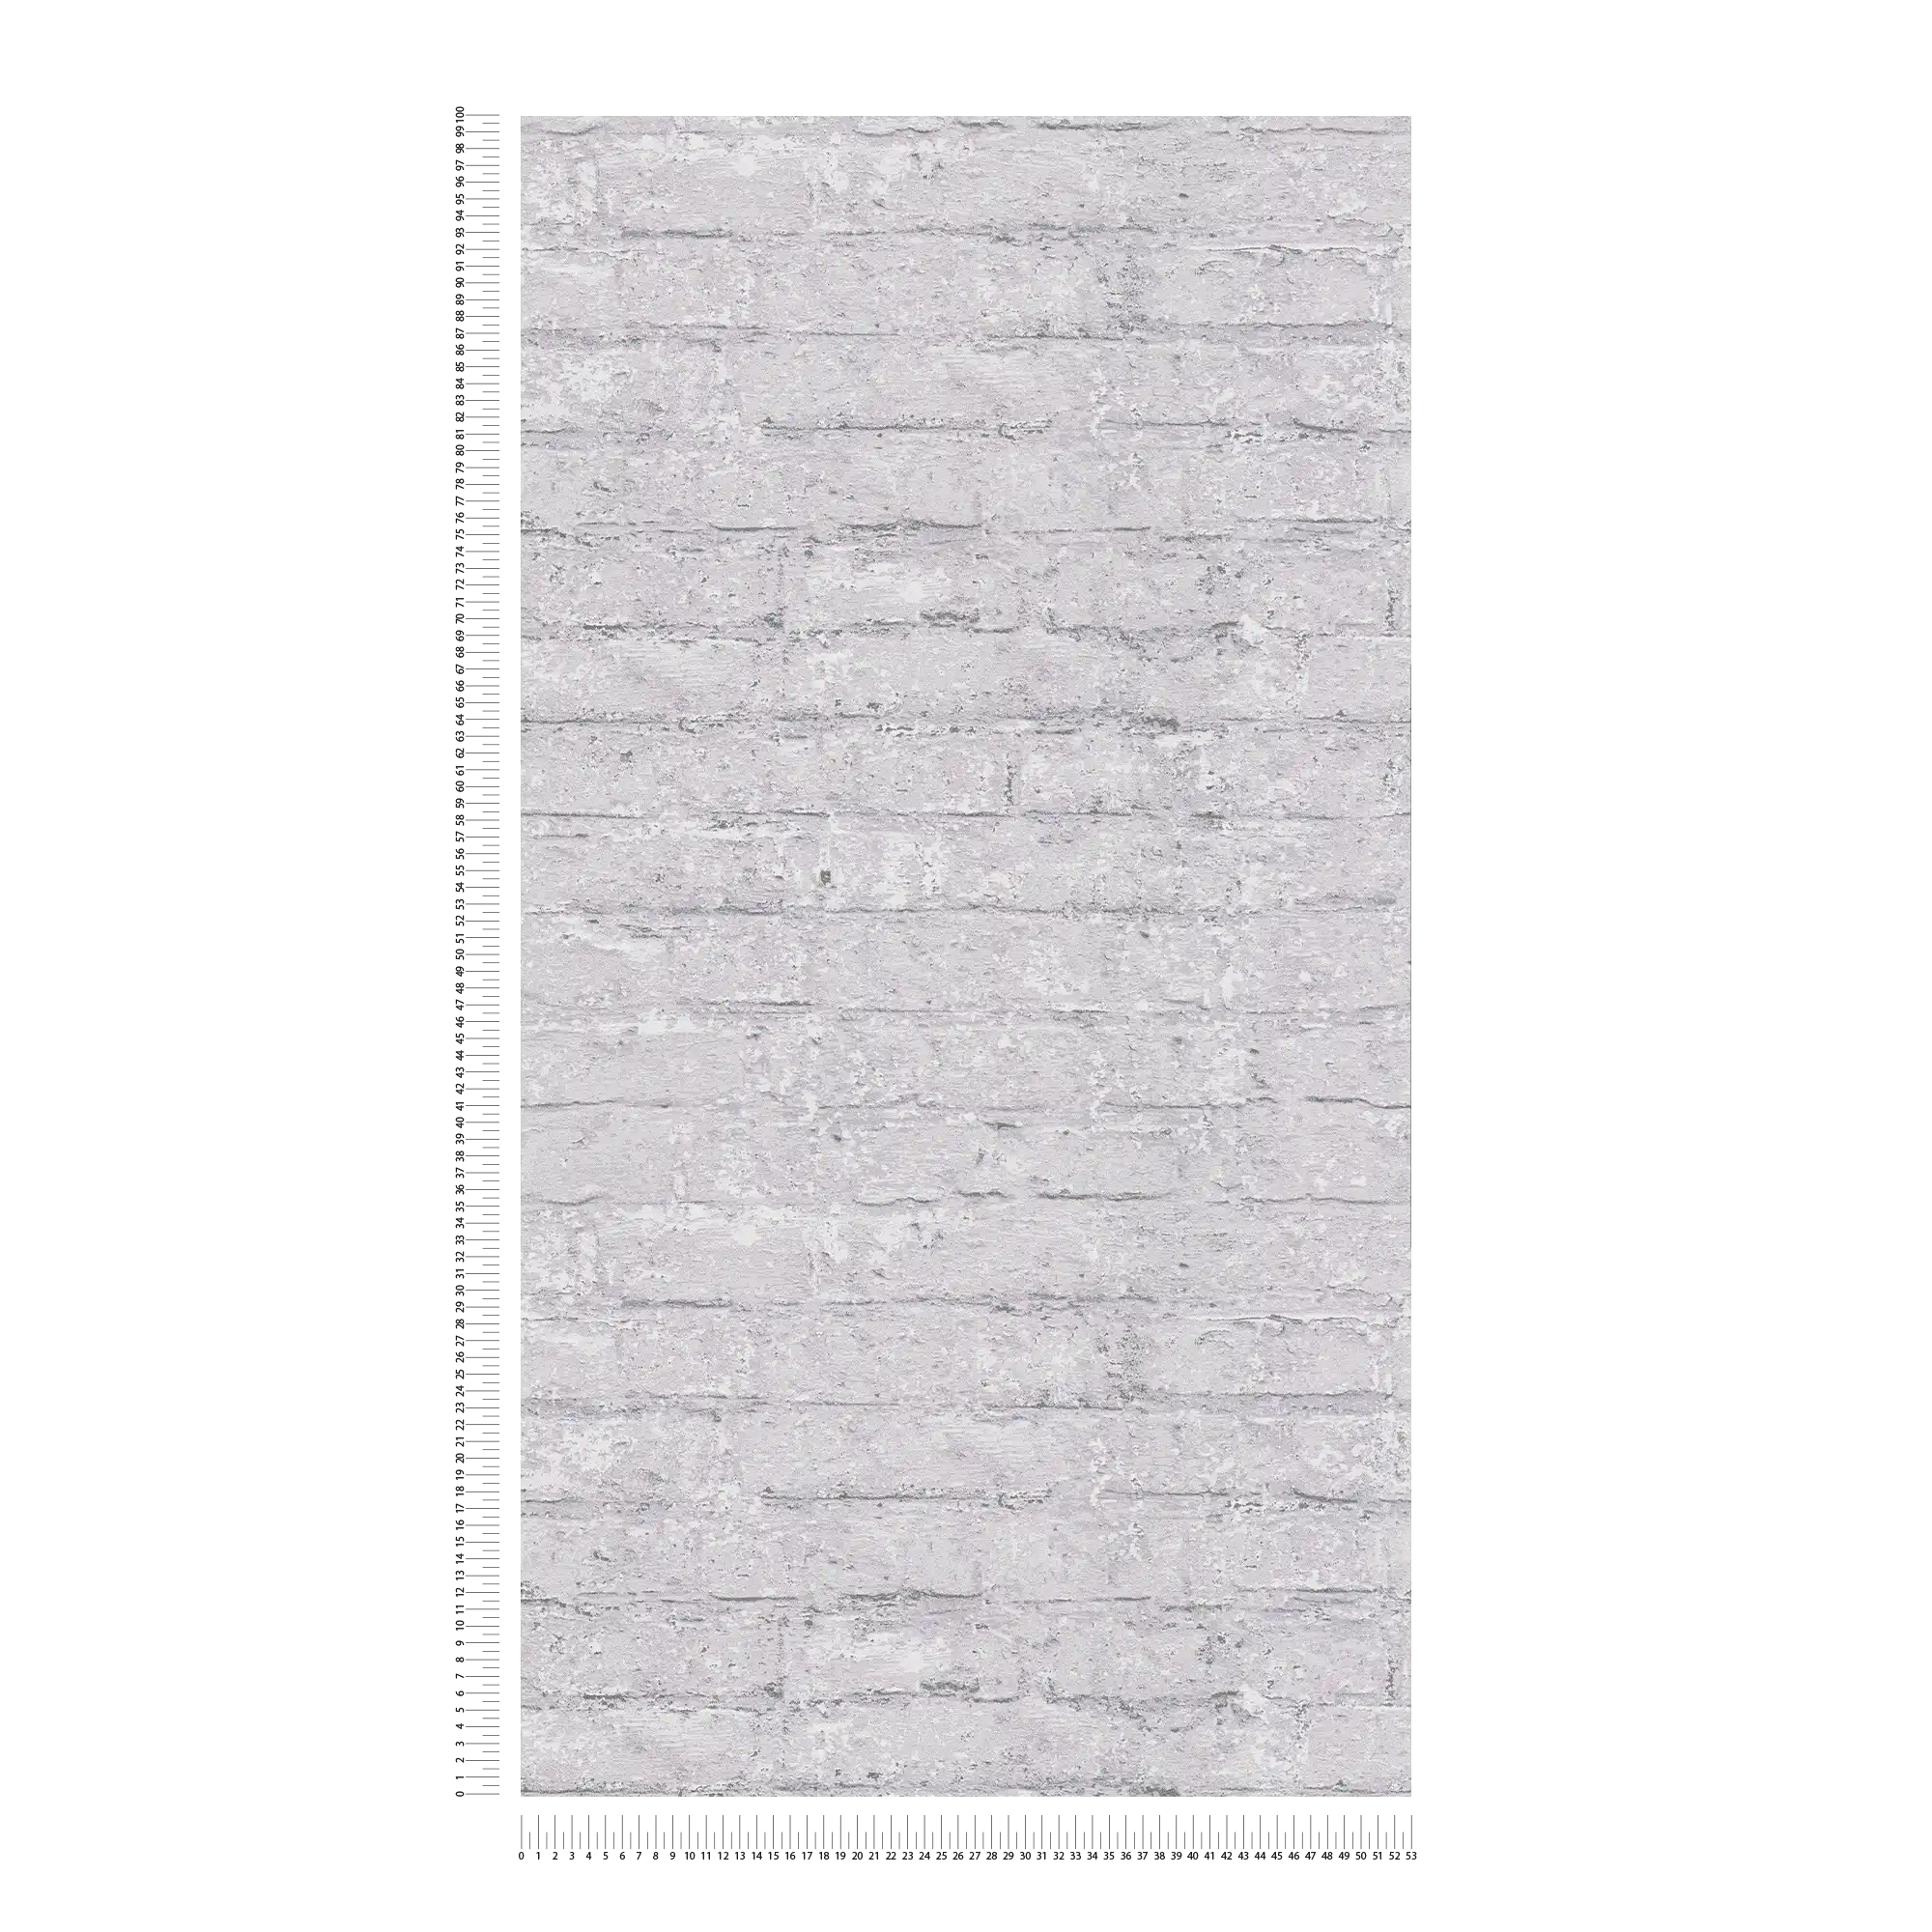             Papel pintado tejido-no tejido ligero con sutil aspecto de ladrillo - gris claro
        